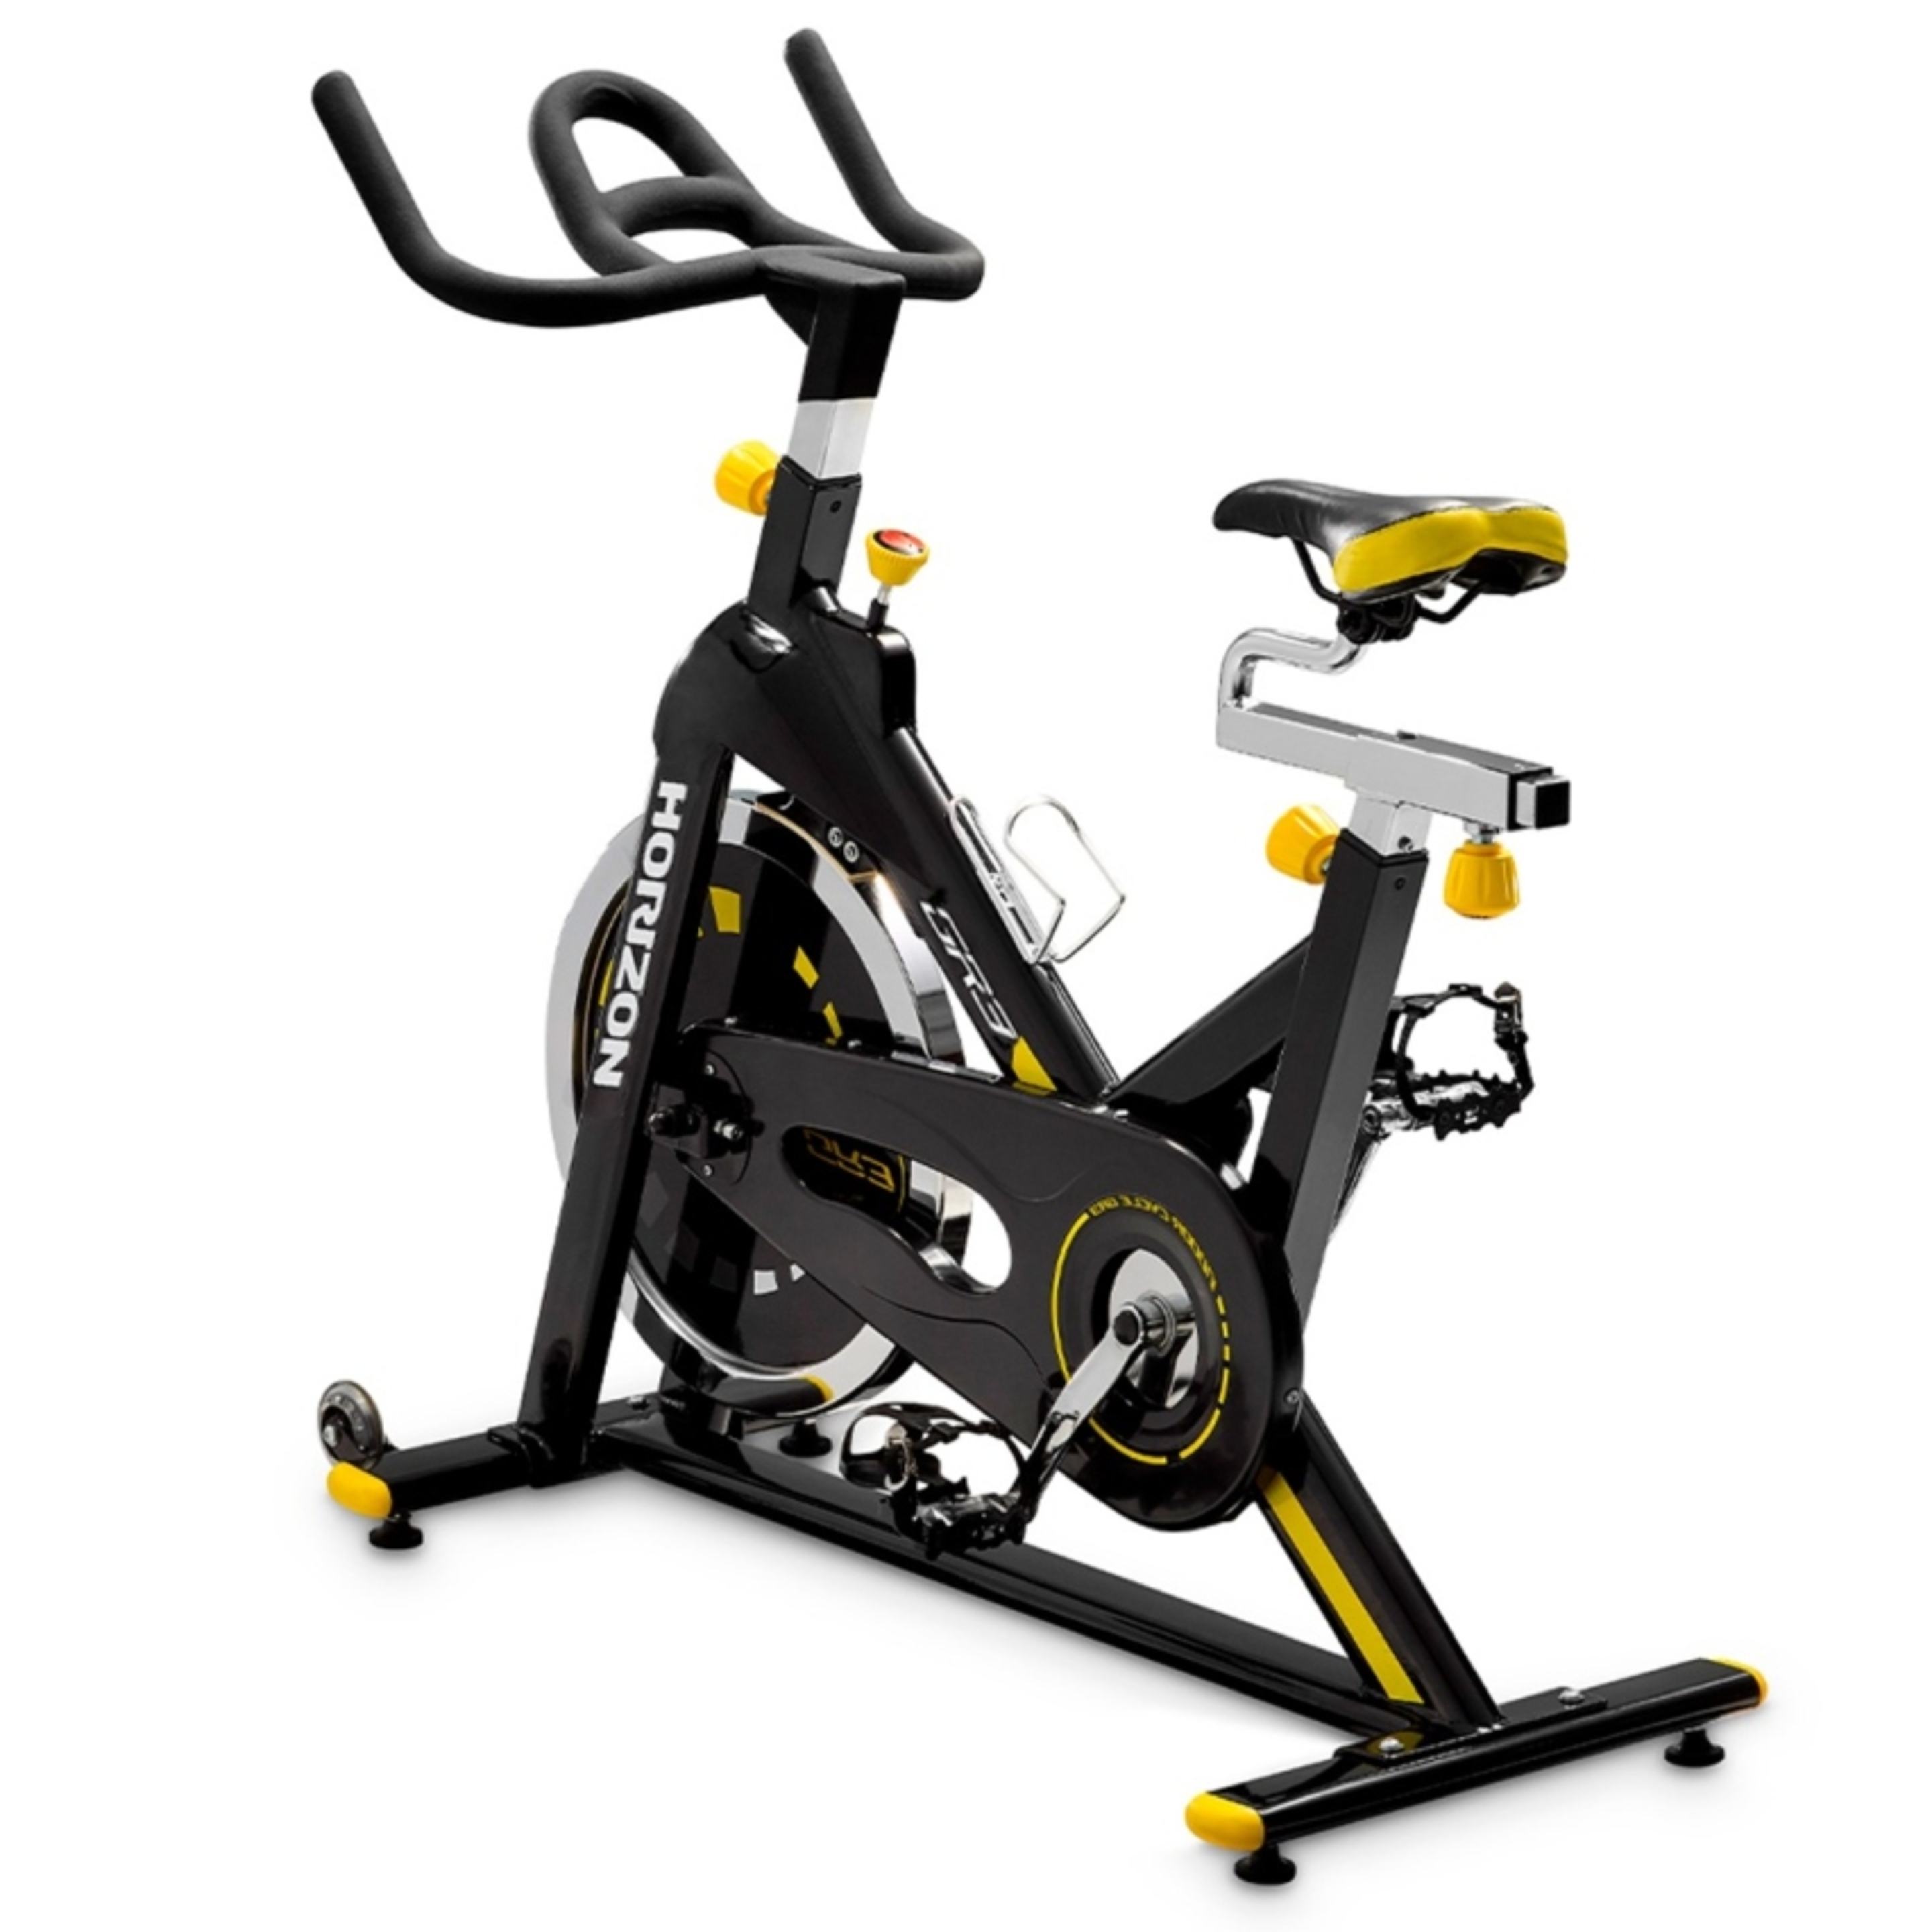 Bicicleta Indoor Horizon Gr3 - amarillo-negro - 